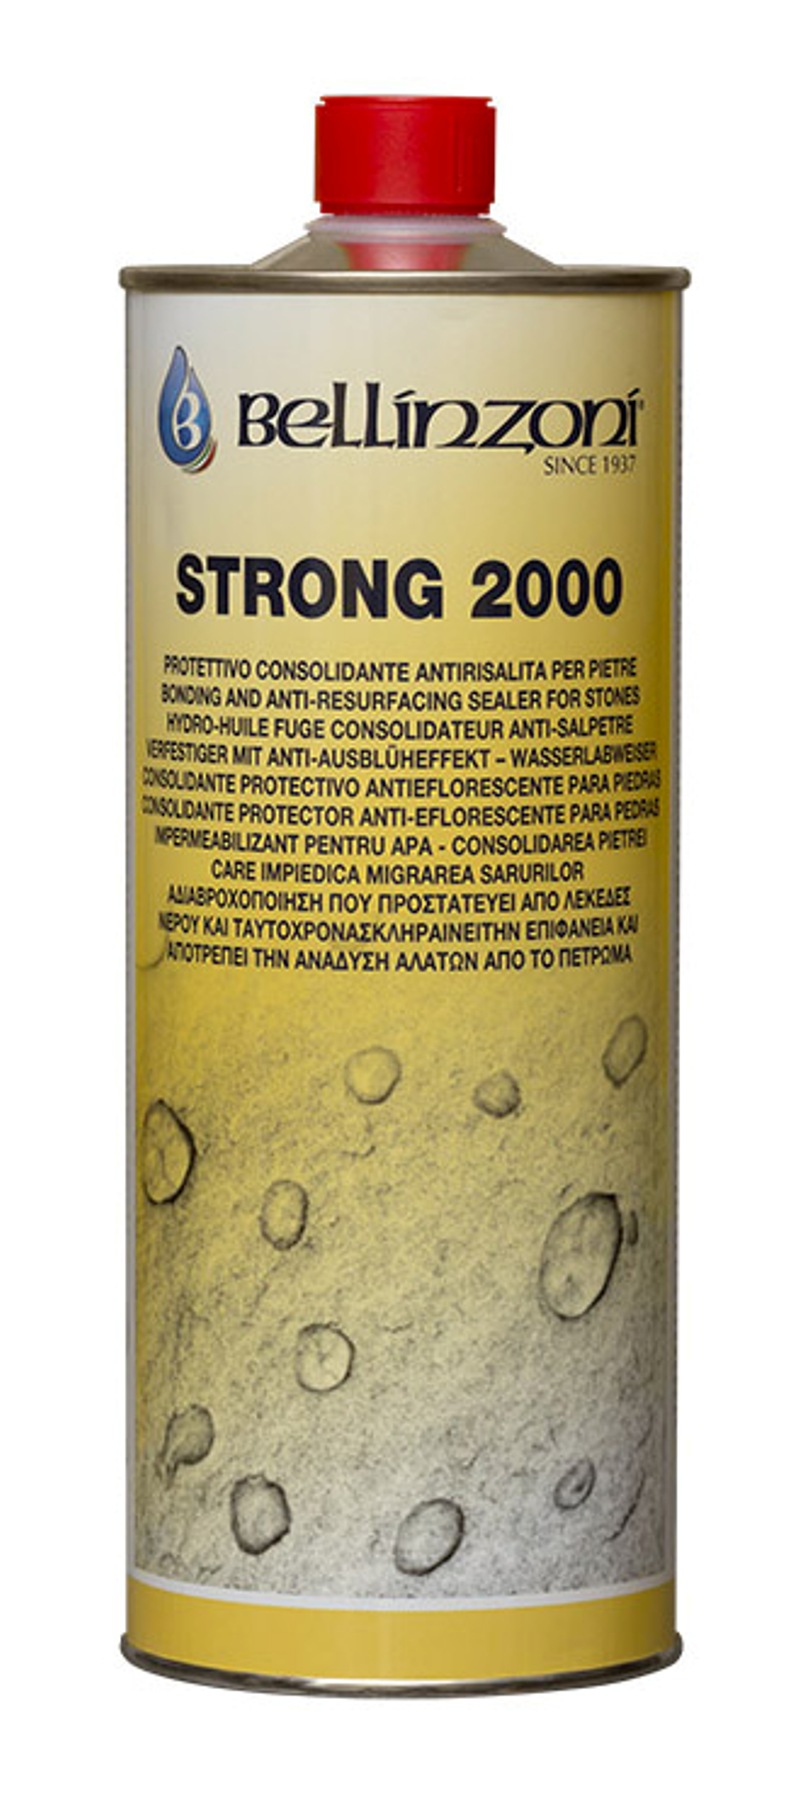 Bellinzoni - Strong 2000 / 1 liter